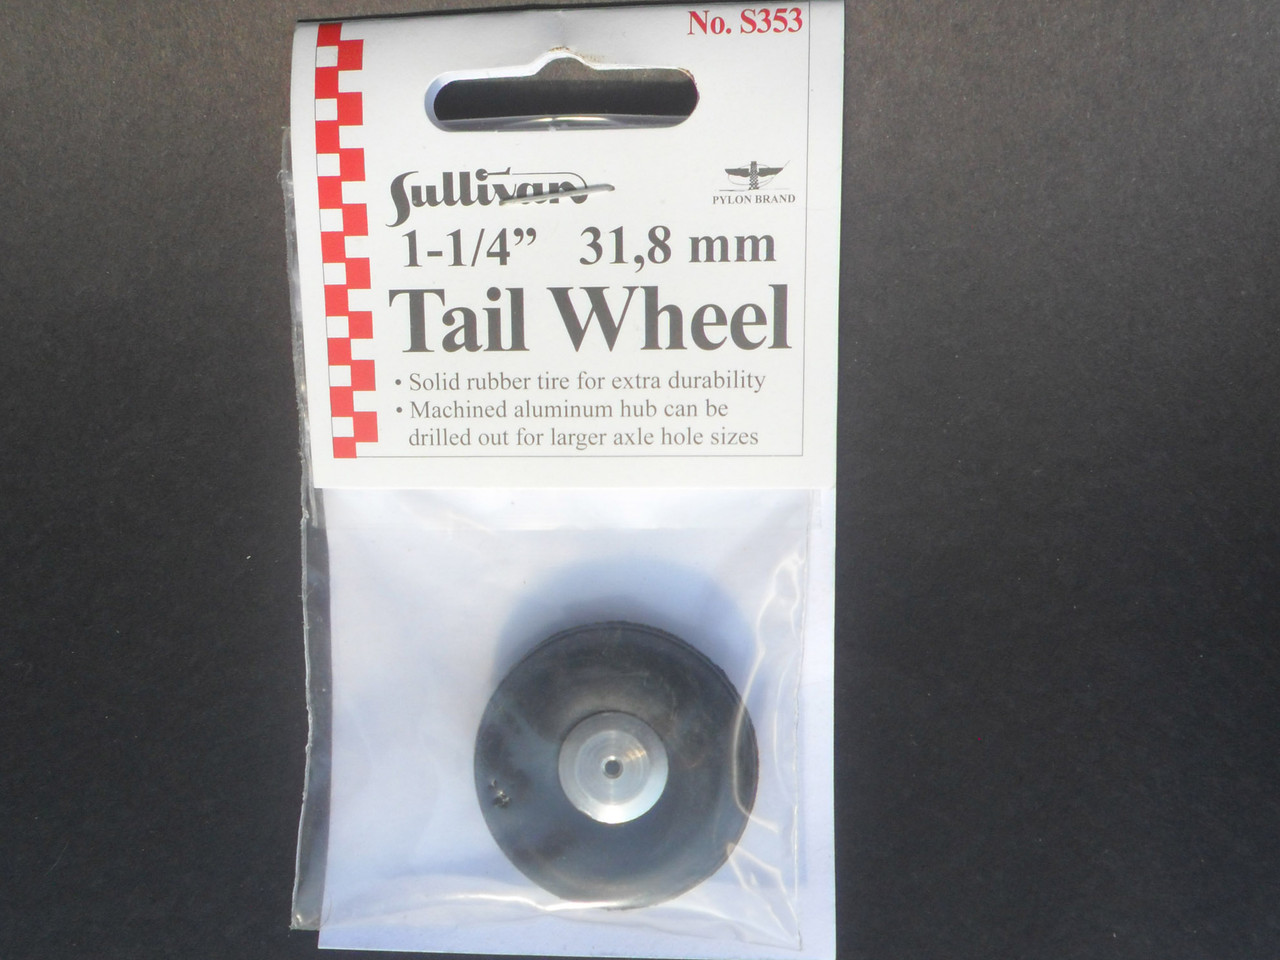 Tail Wheel - 31.8mm (1-1/4") - (SU-353)